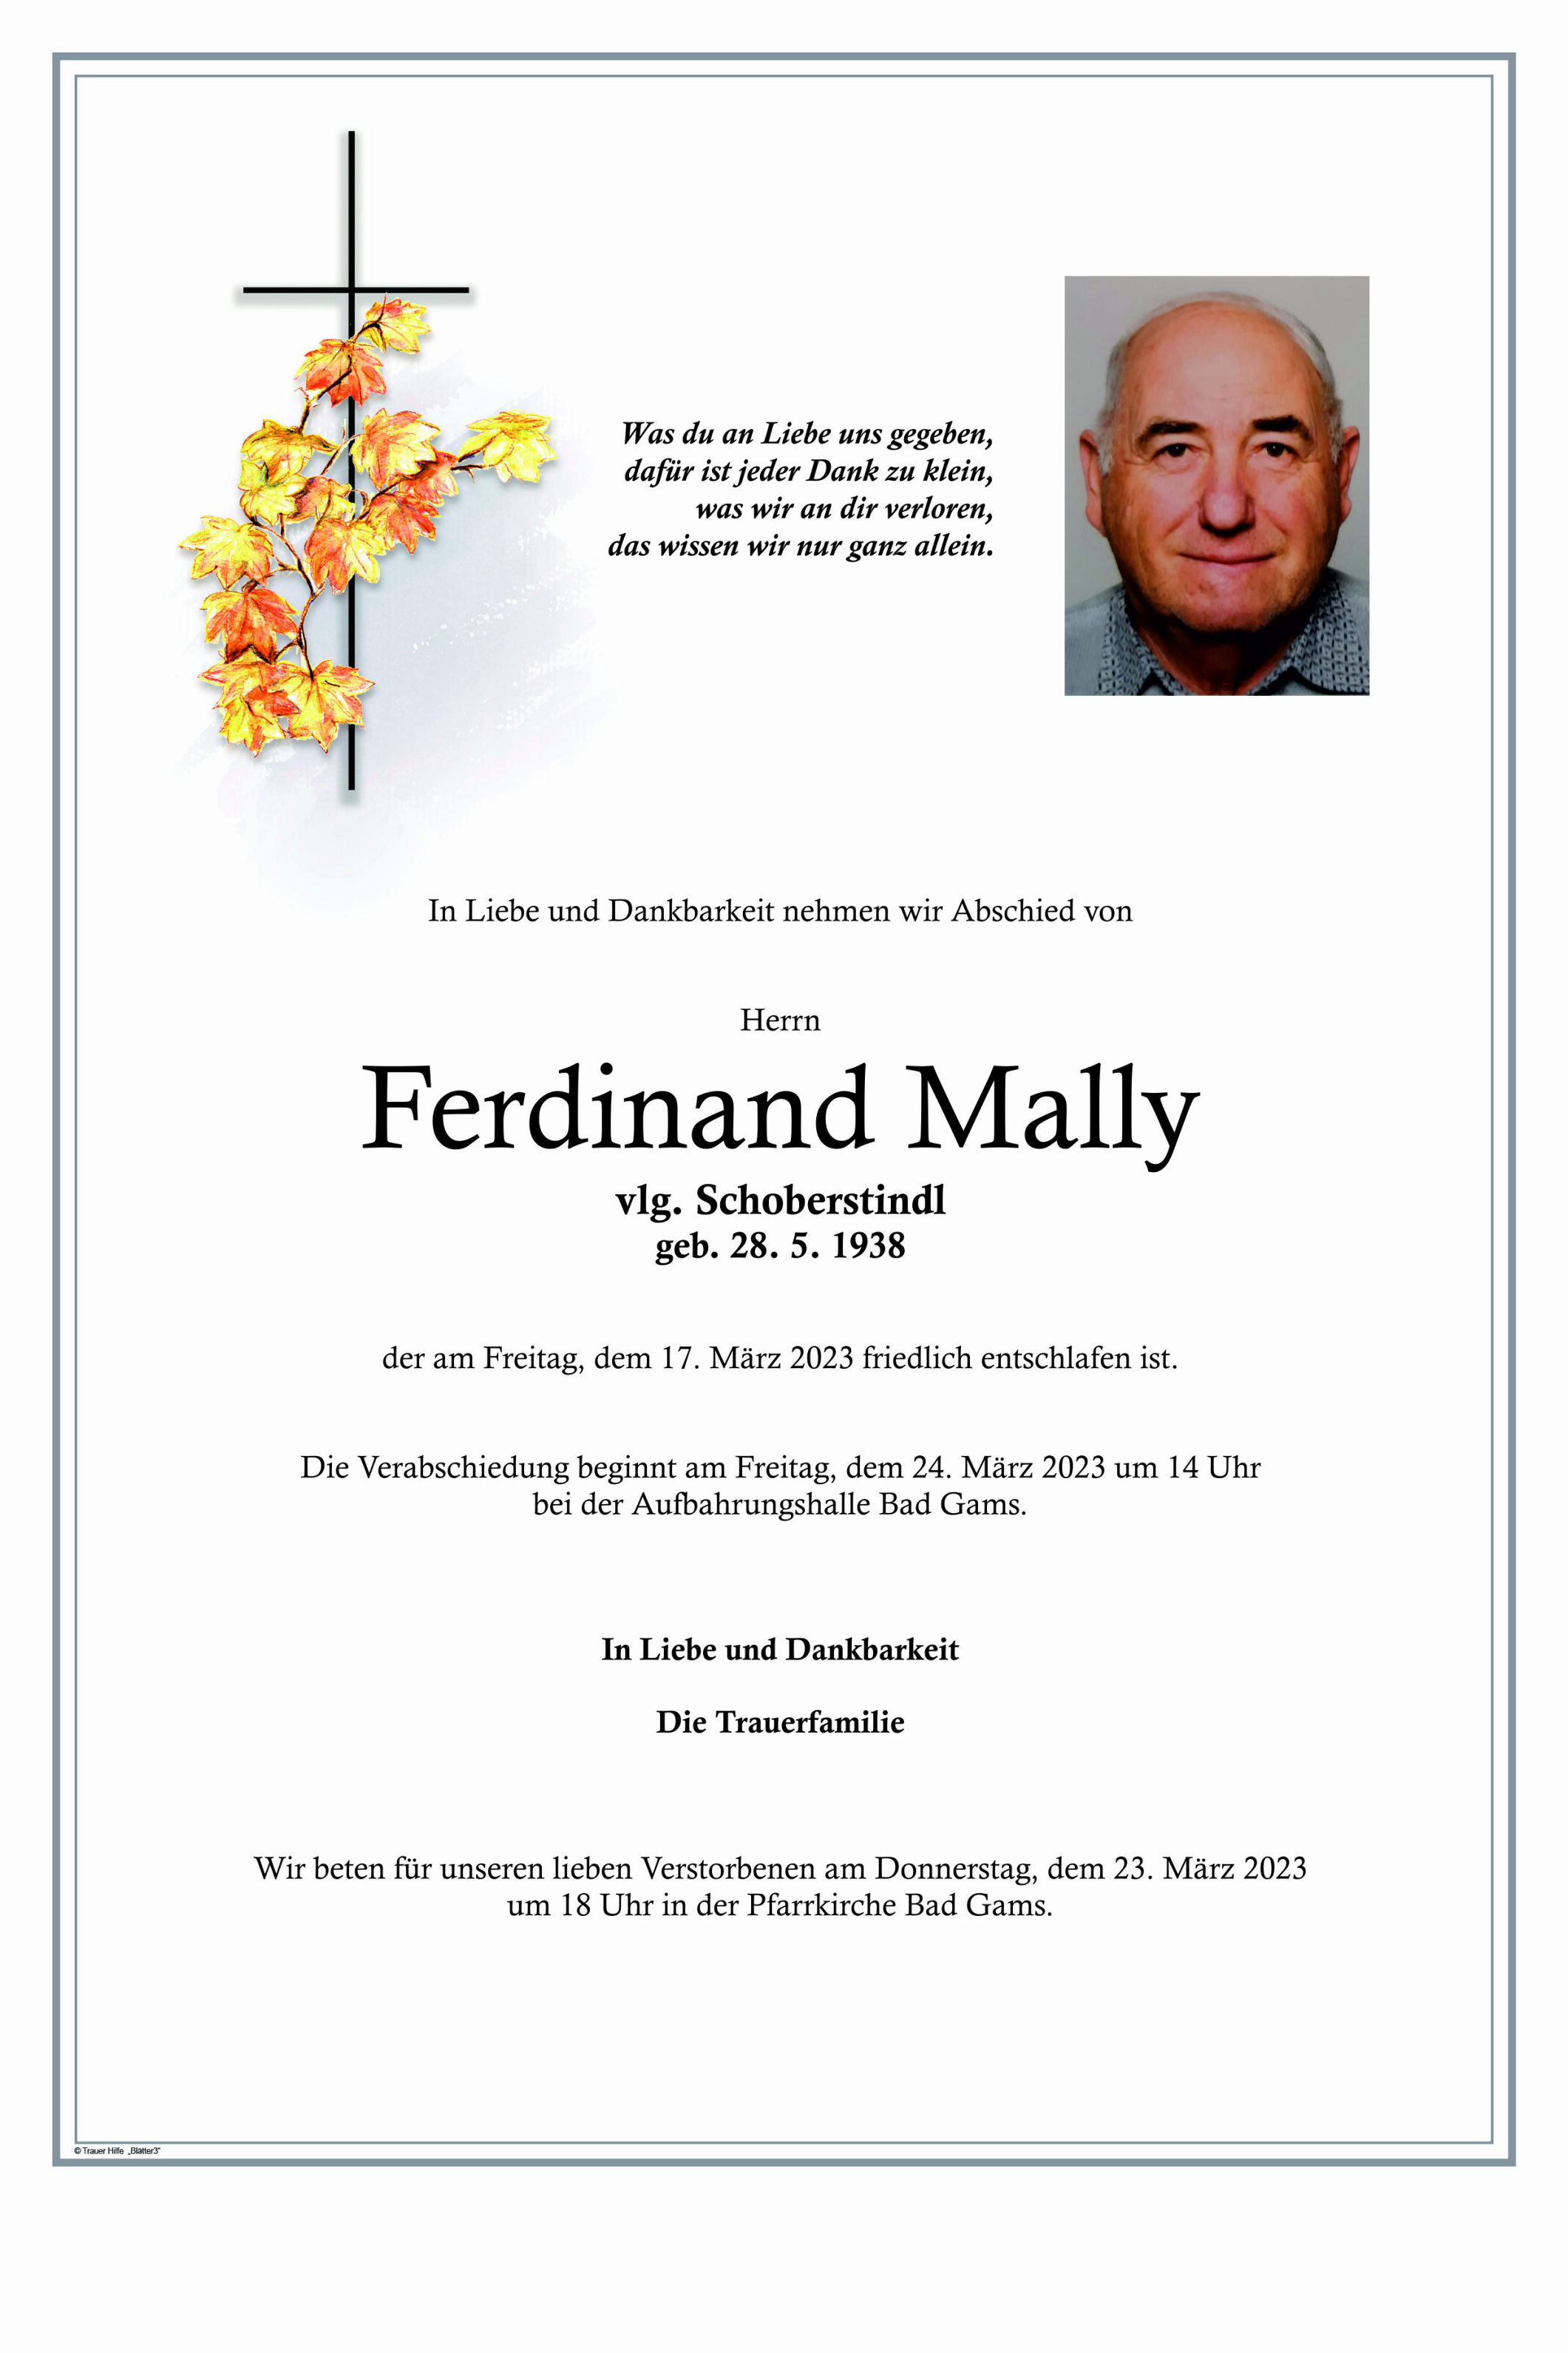 Ferdinand Mally